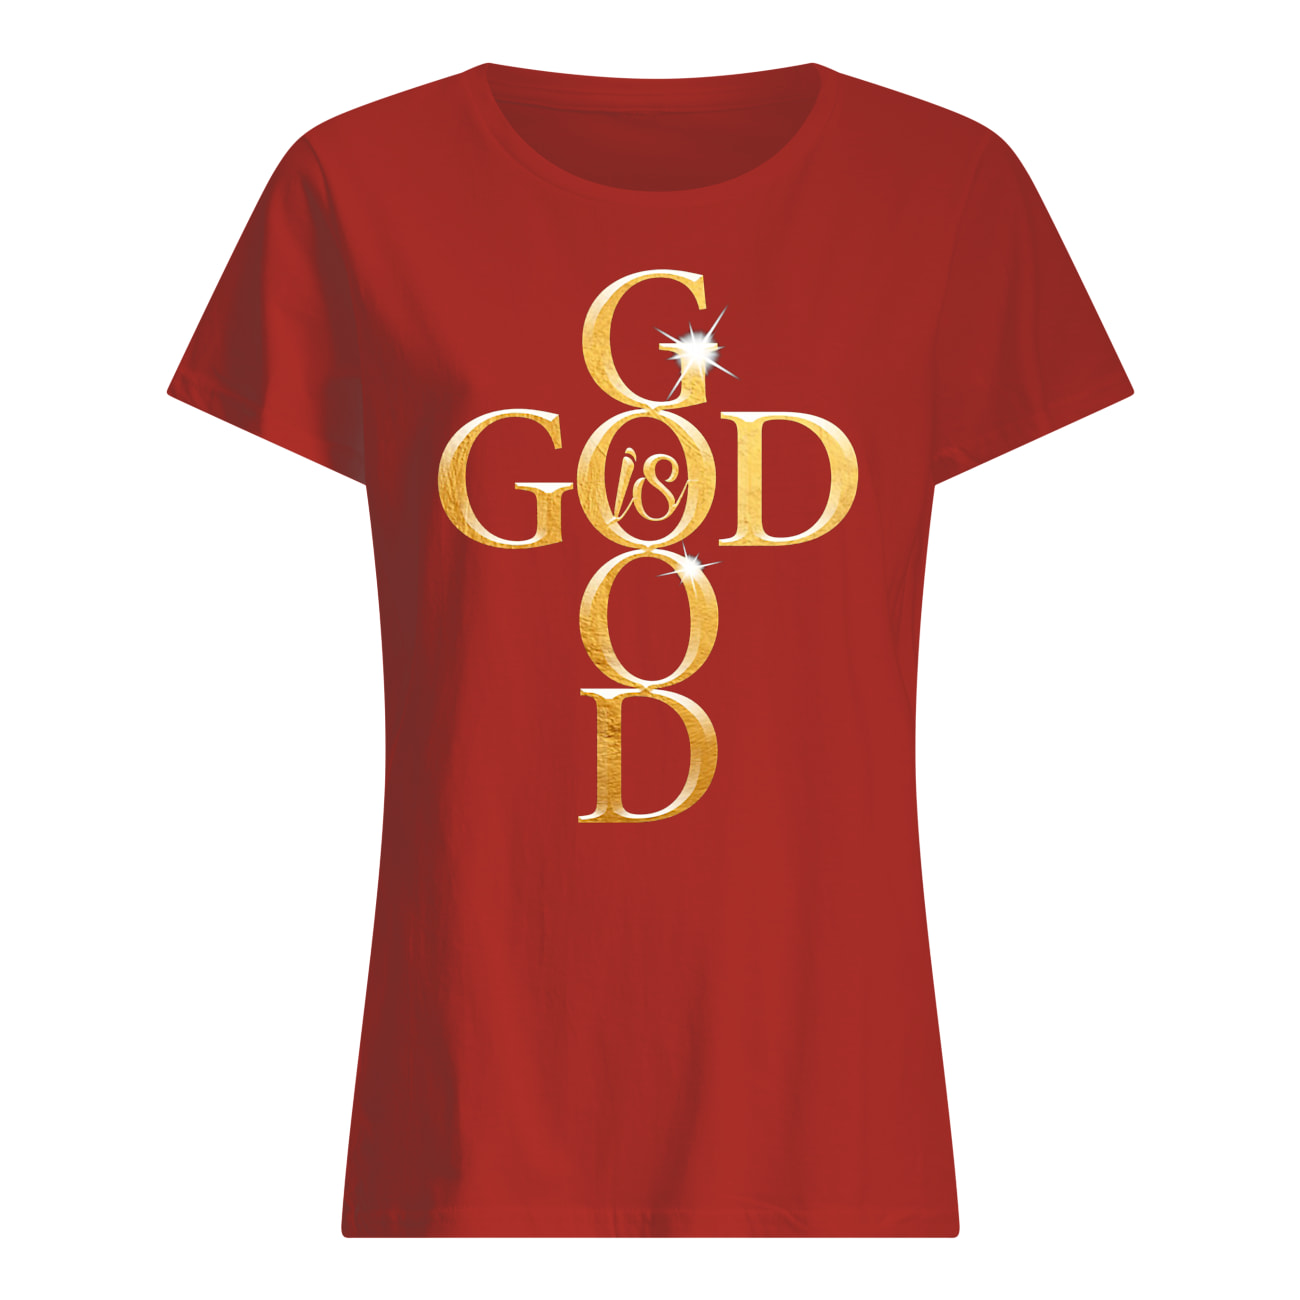 God is good womens shirt